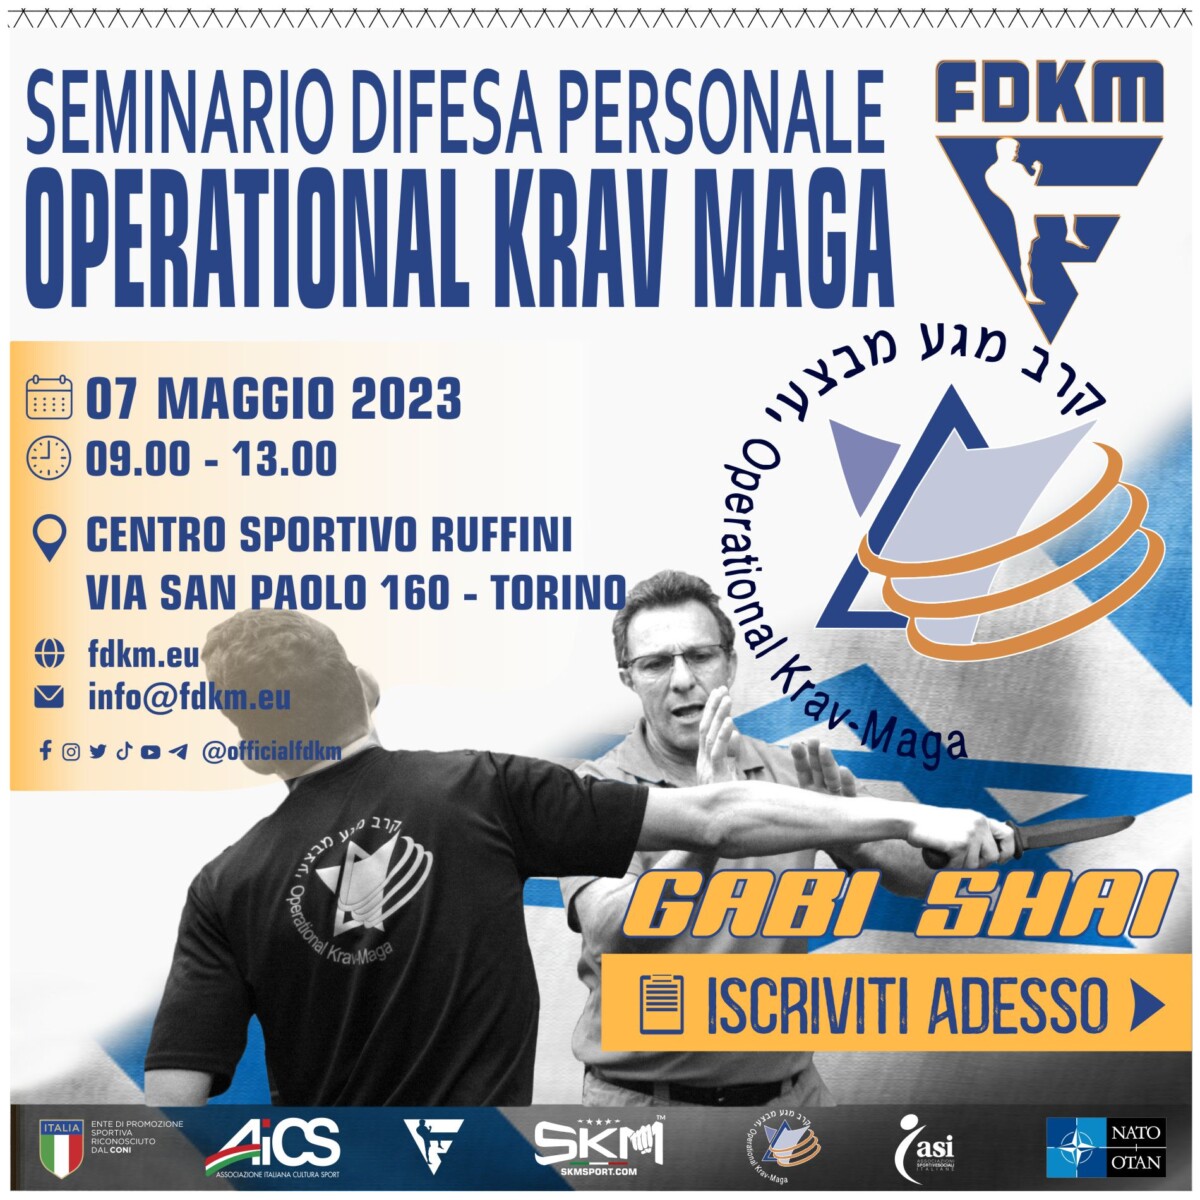 Seminario Operational Krav Maga Gabi-Shai Torino 7 Mag 2023